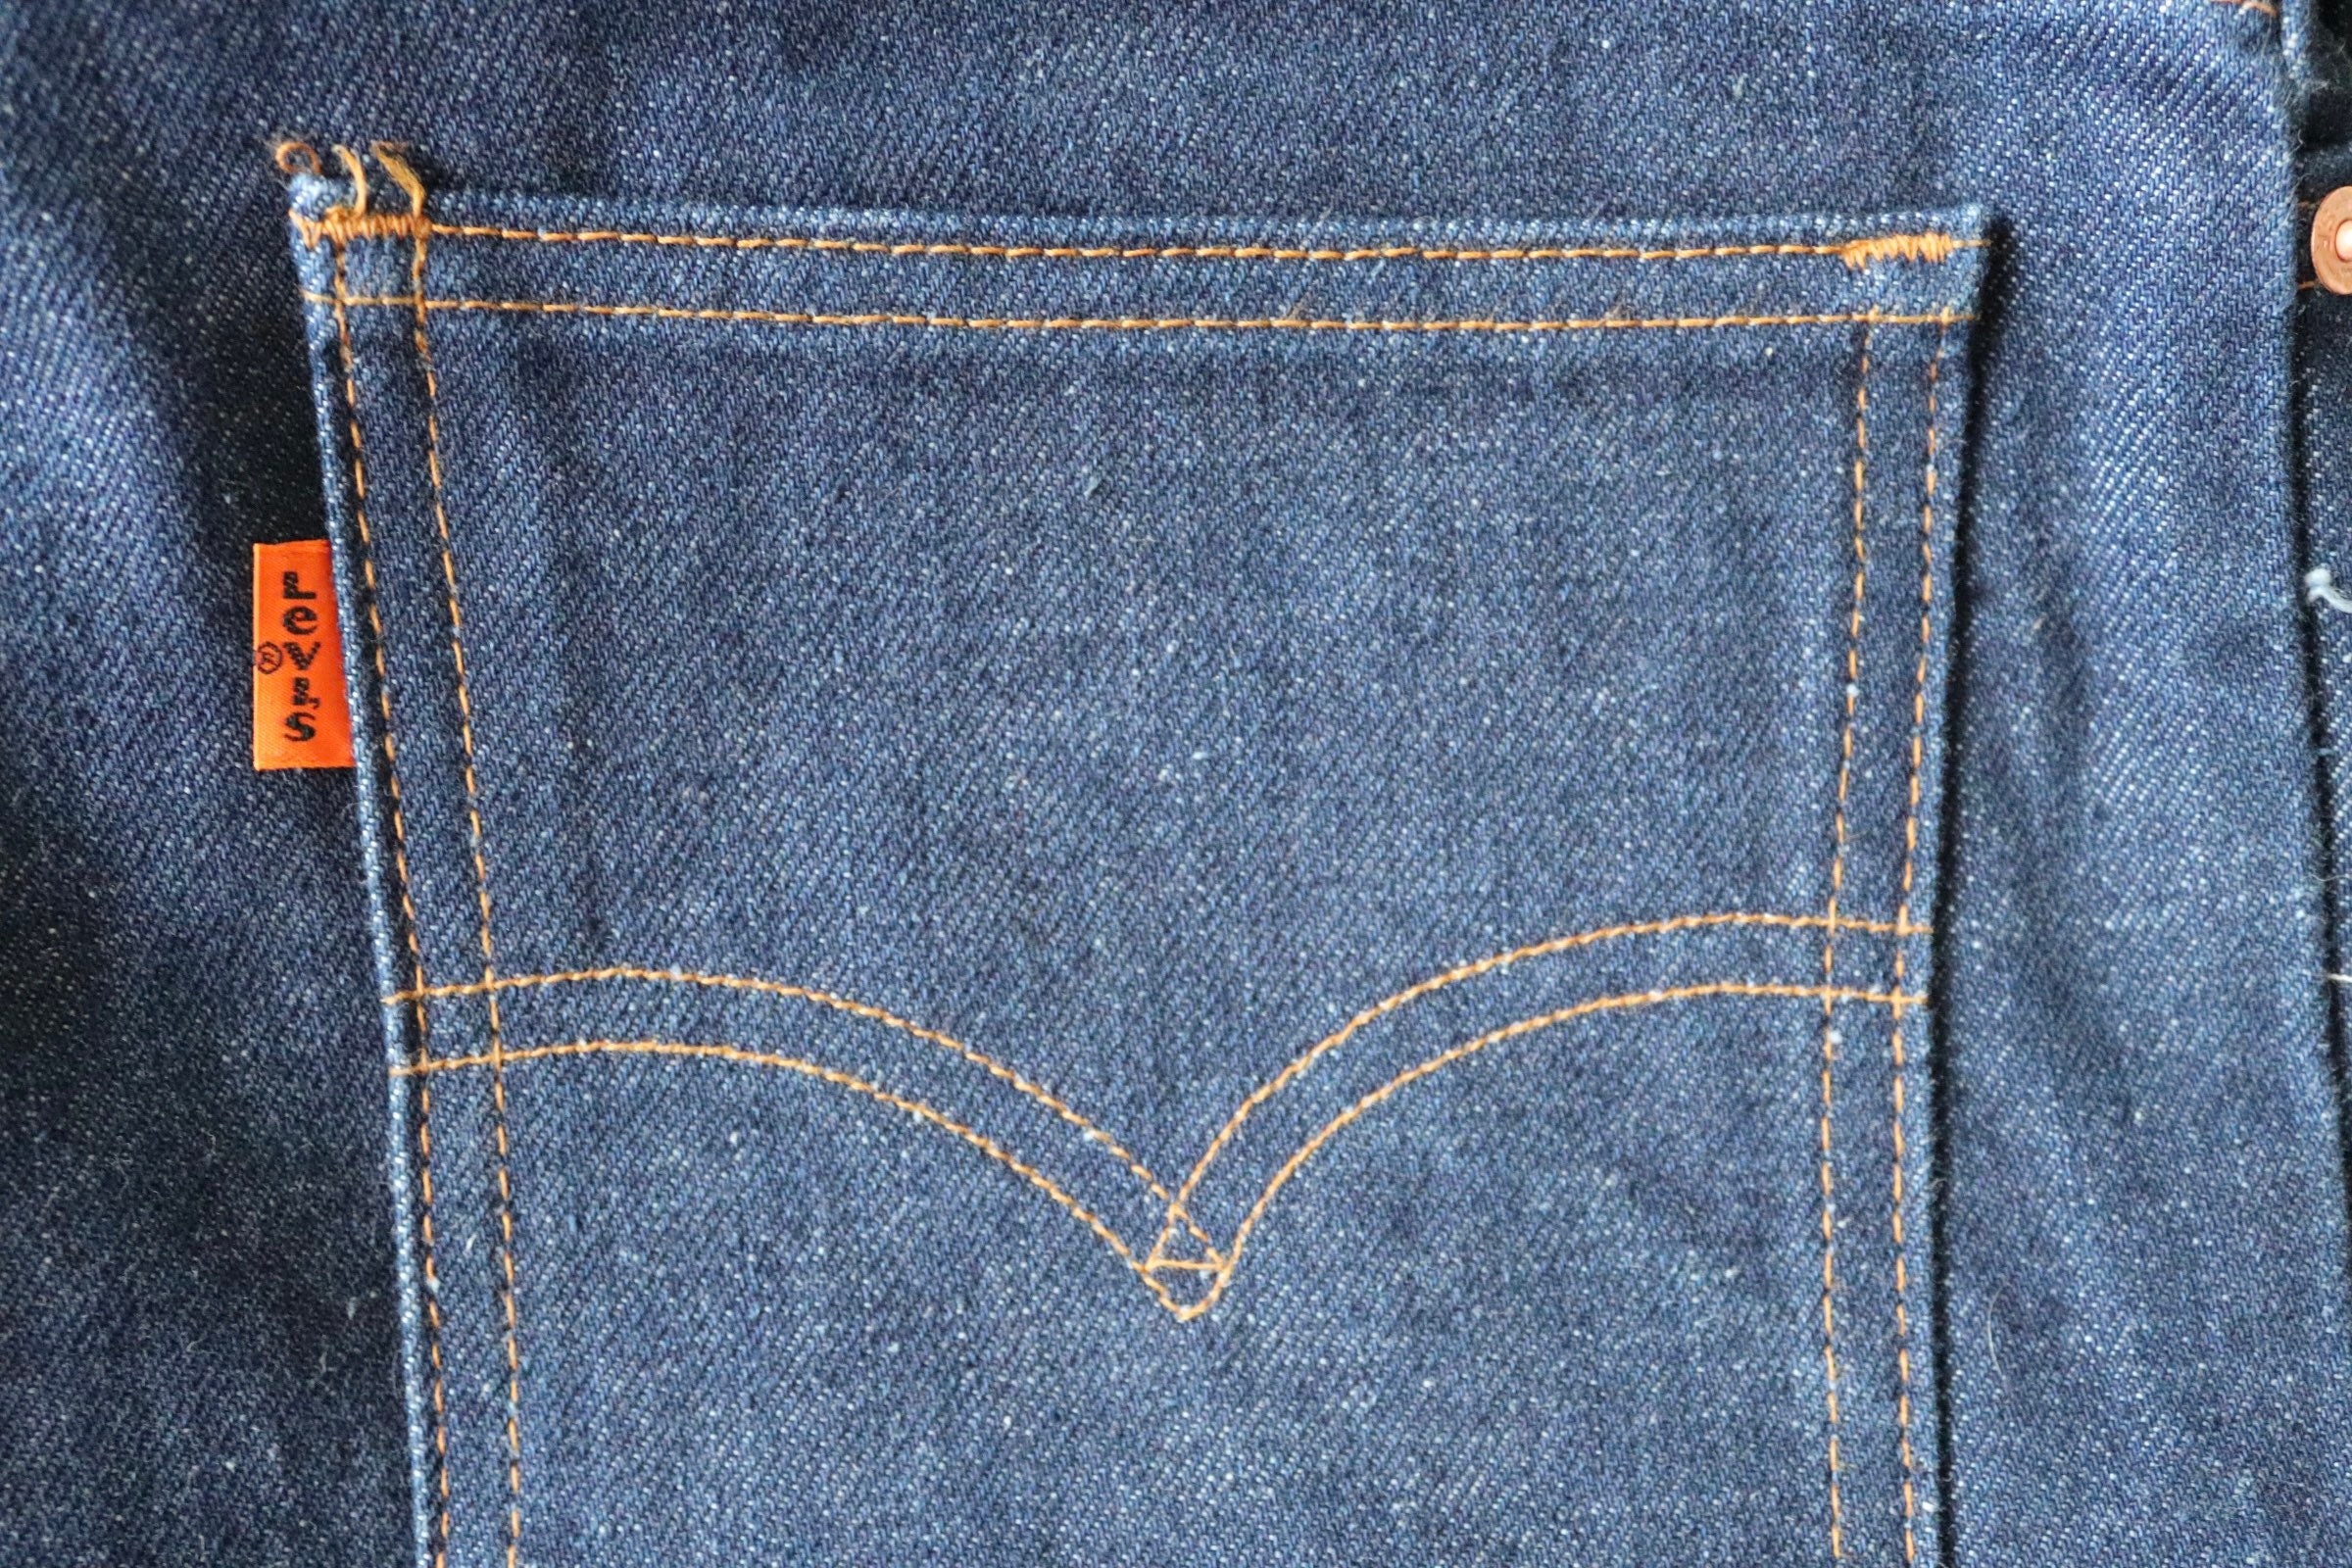 Vintage 1980s 80s deadstock Levi Strauss Levis 527 0217 denim jeans  selvedge small e orange tab made in Great Britain 33” x 30” Talon zipper